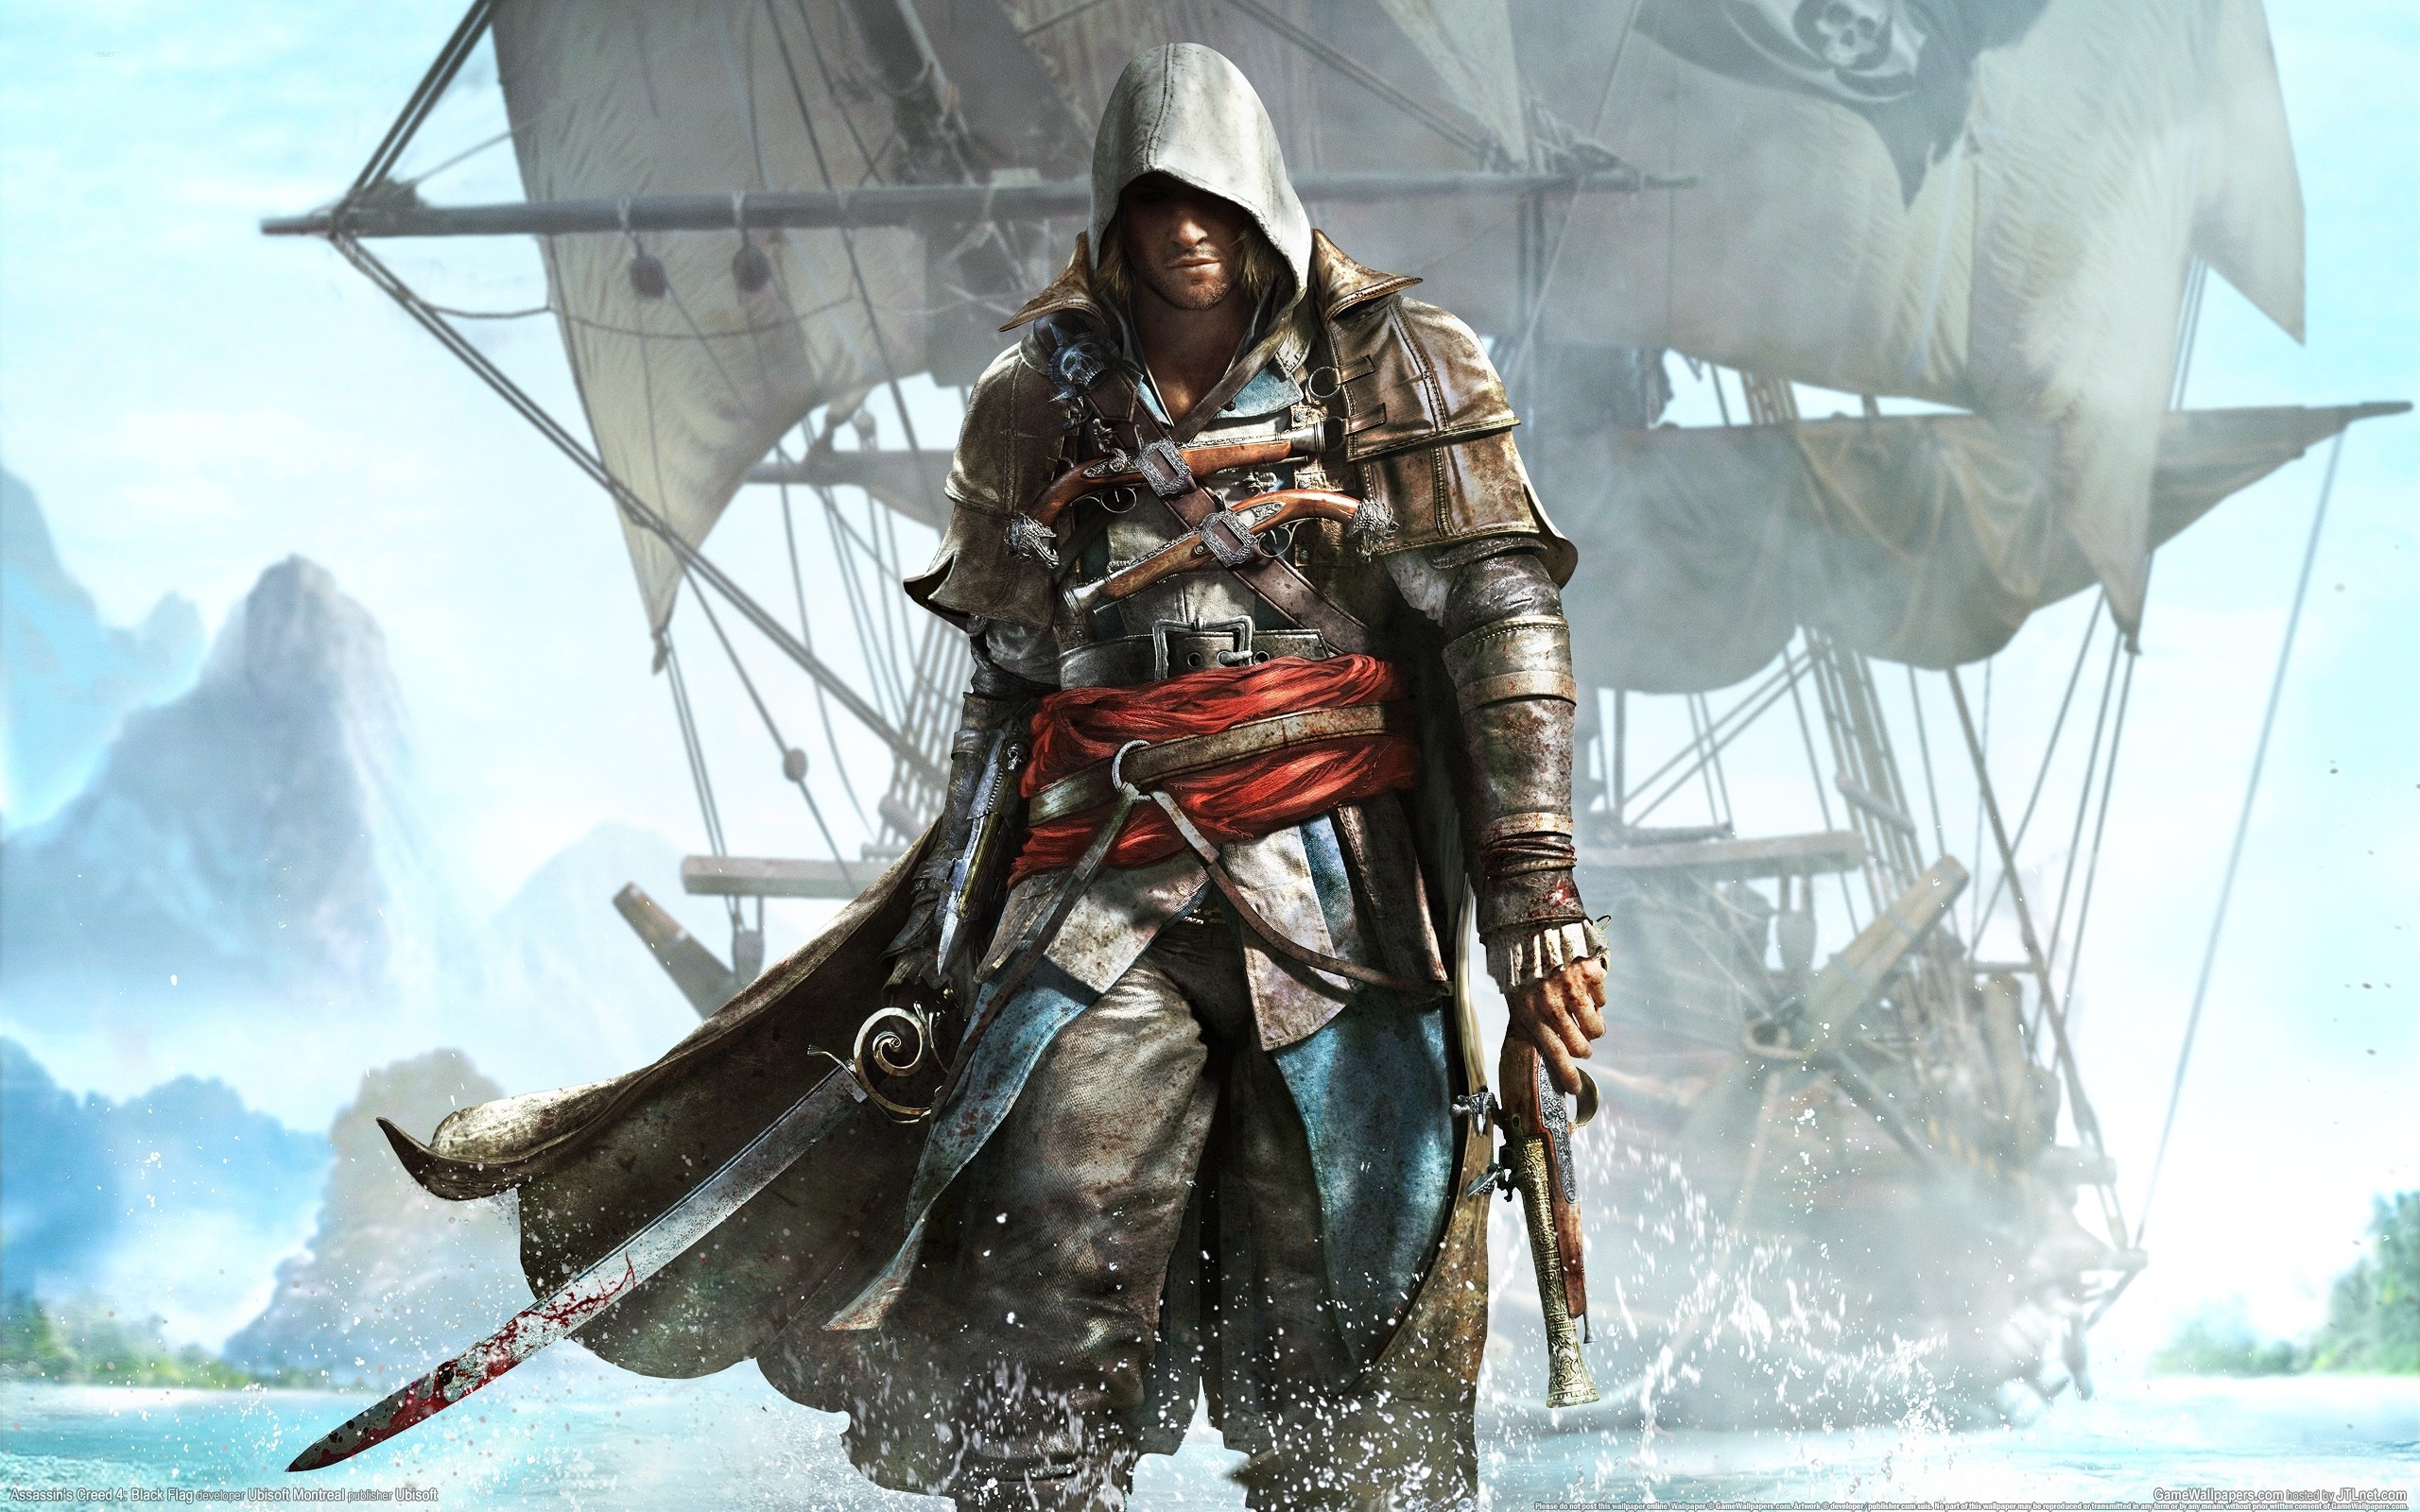 General 2560x1600 video games Assassin's Creed video game art sailing ship gun hoods PC gaming Ubisoft video game men blood dual wield